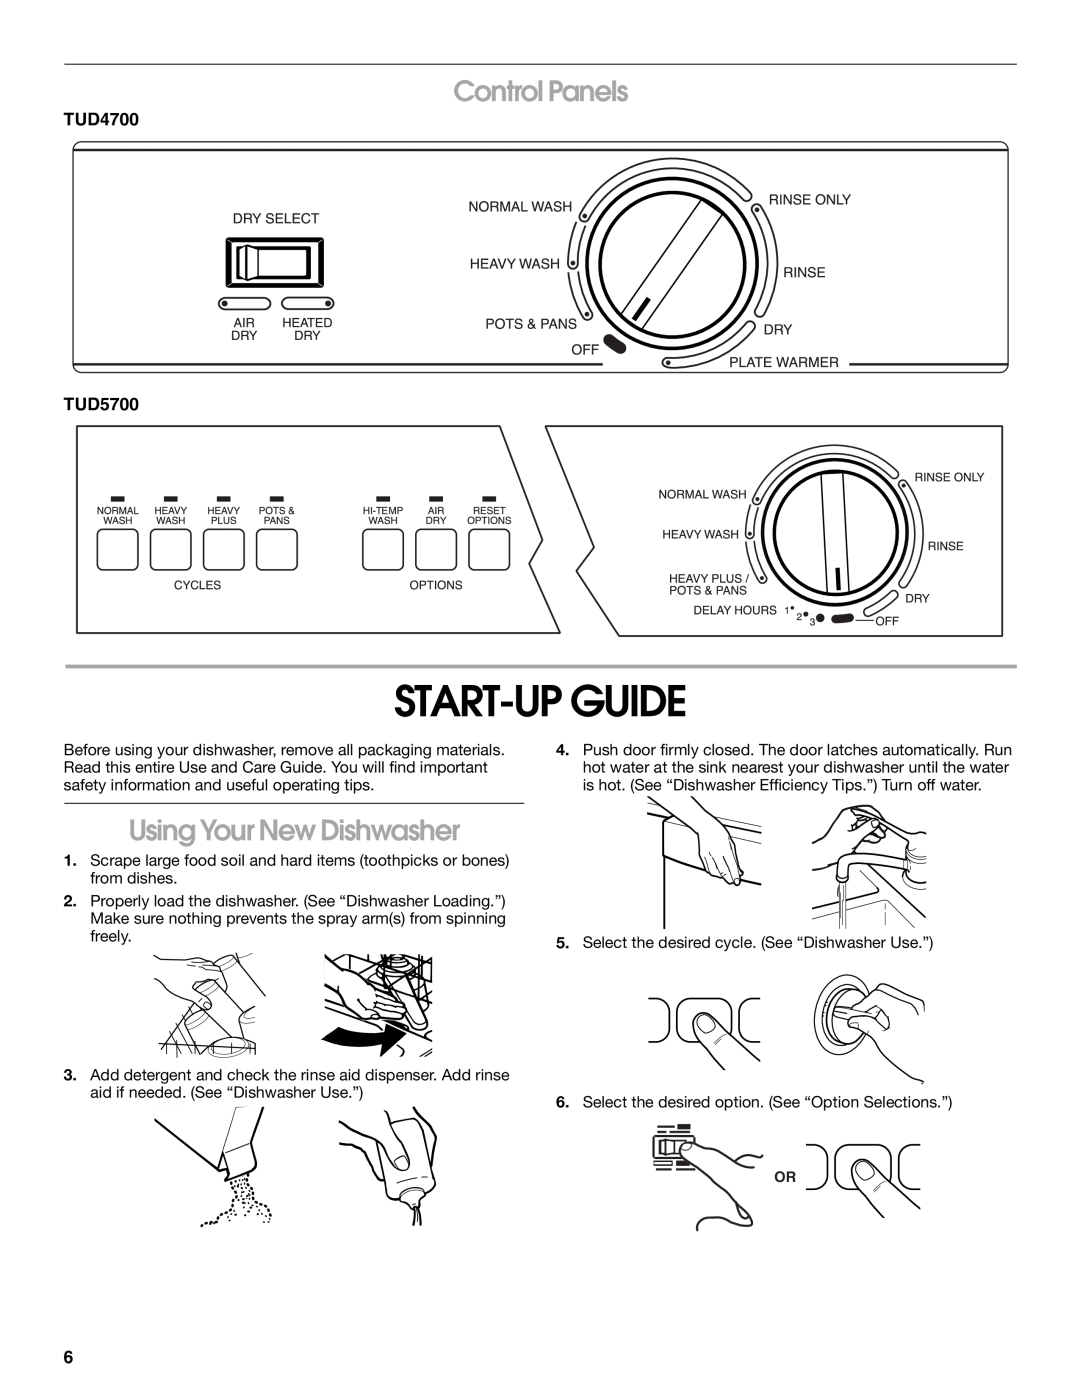 Estate TUD5700, TUD4700 manual Start-Up Guide, Control Panels, Using Your New Dishwasher 